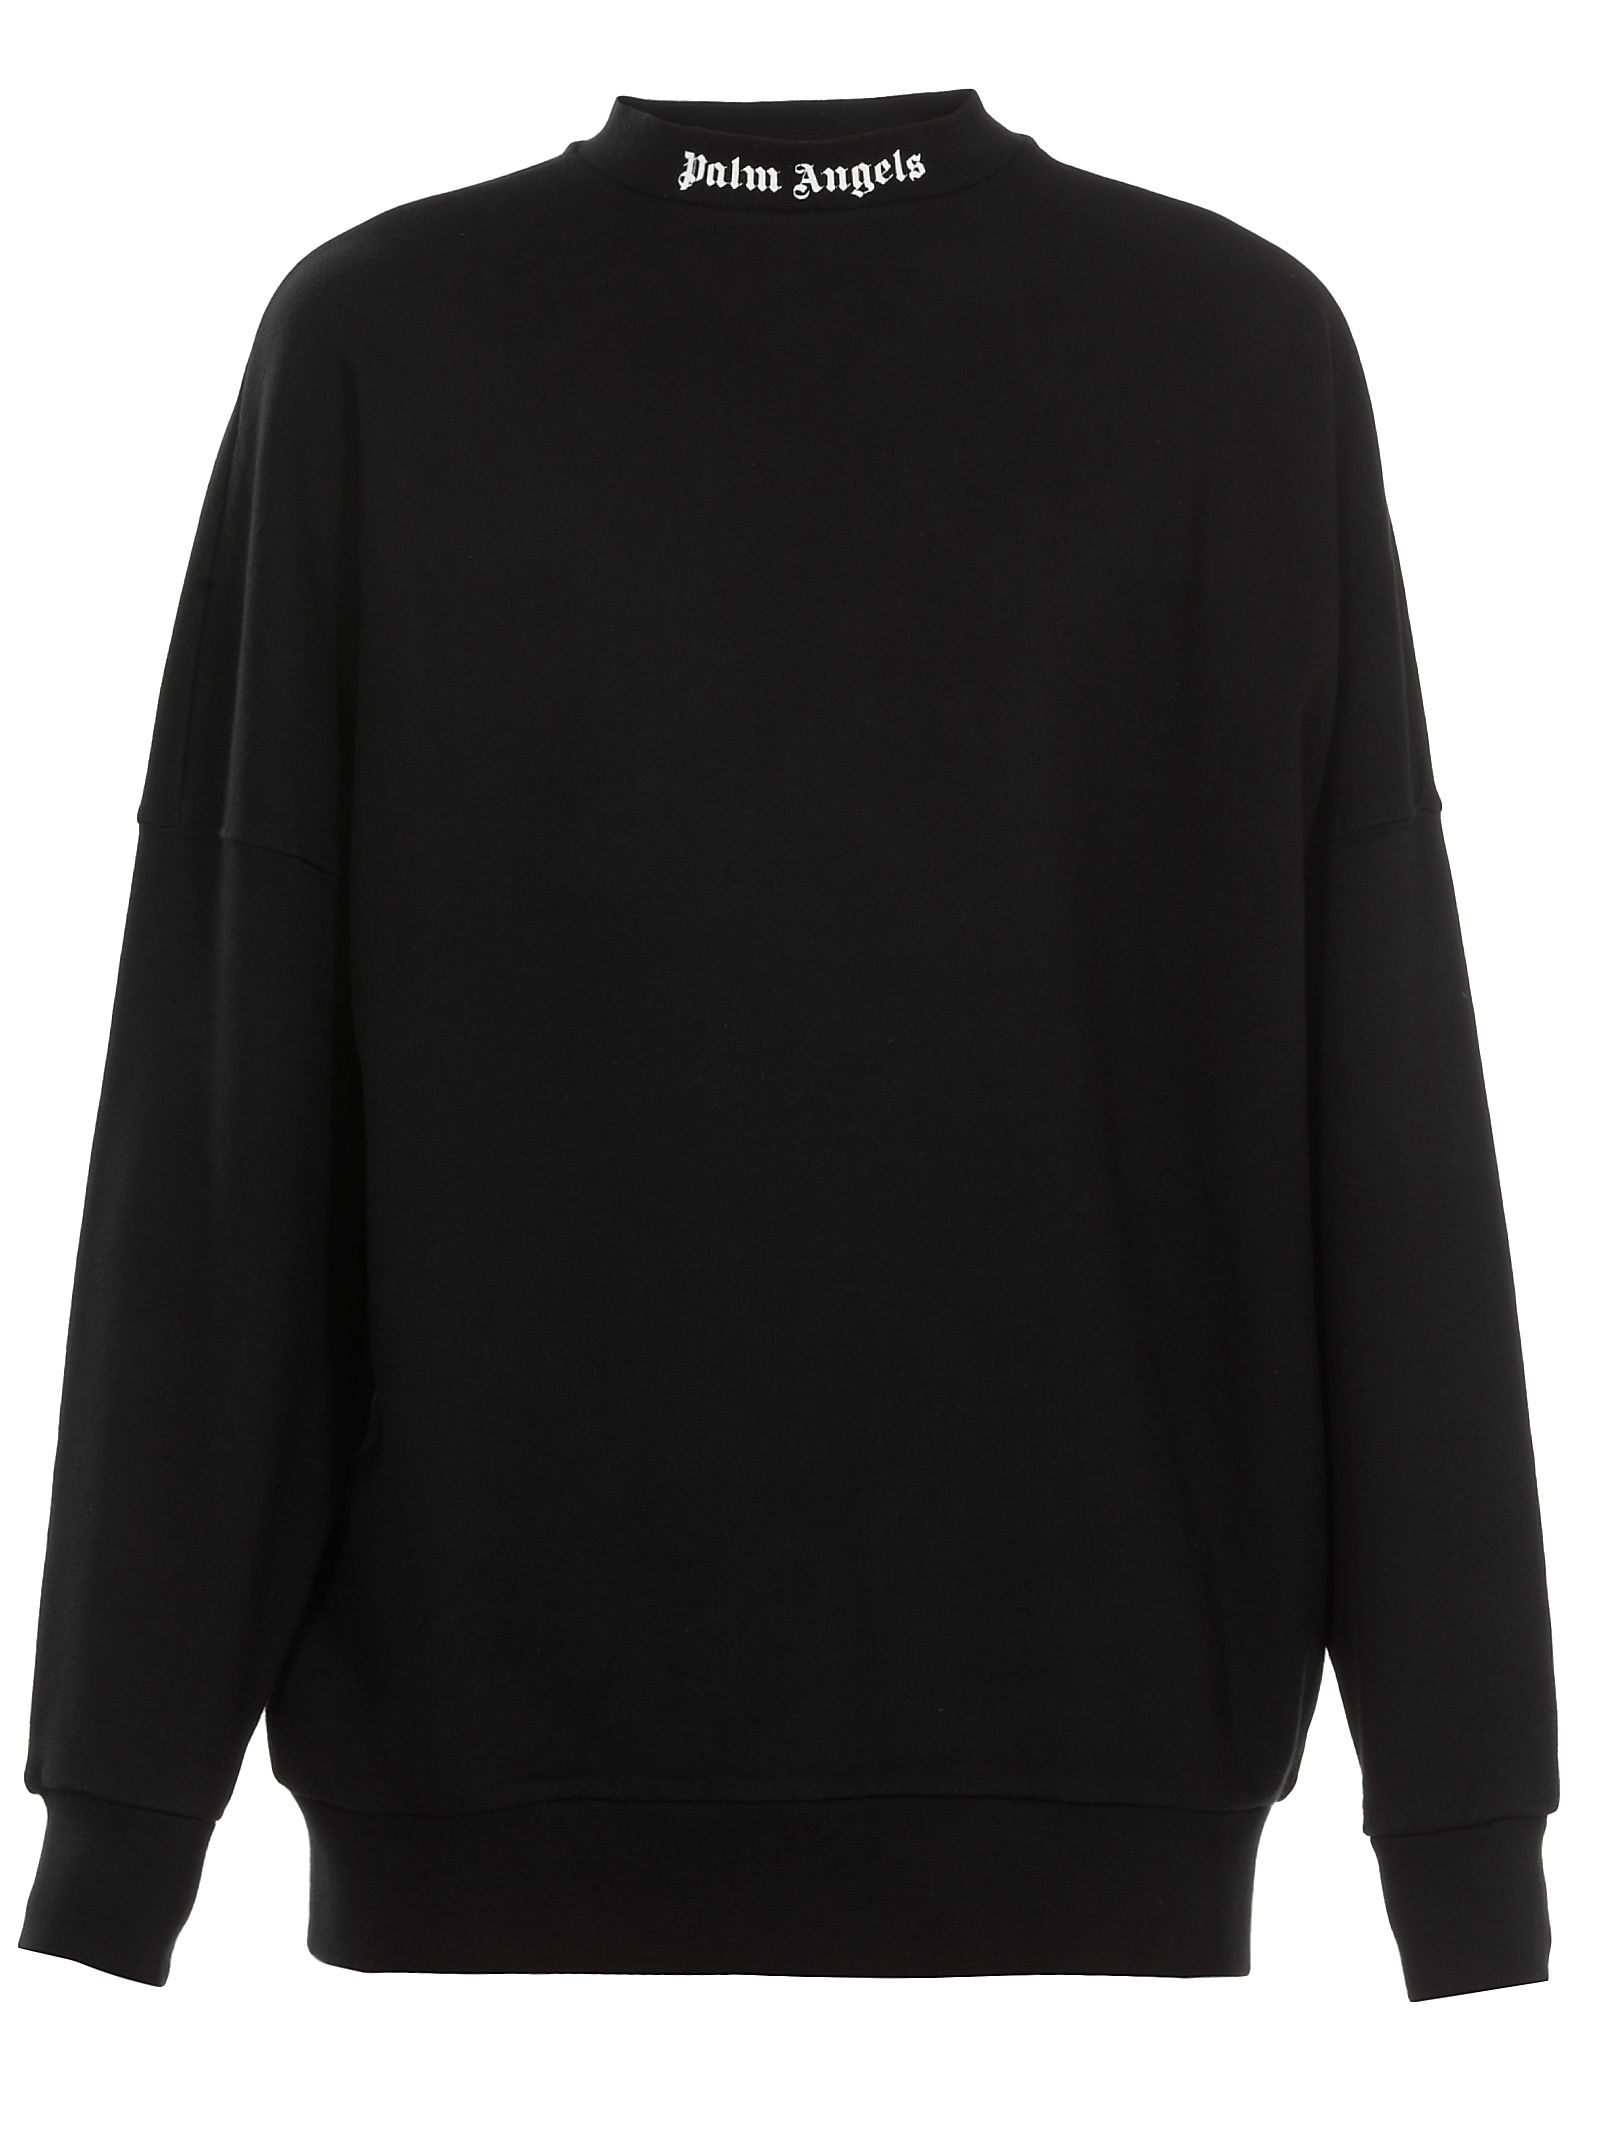 Palm Angels Logo Sweater In Black White | ModeSens